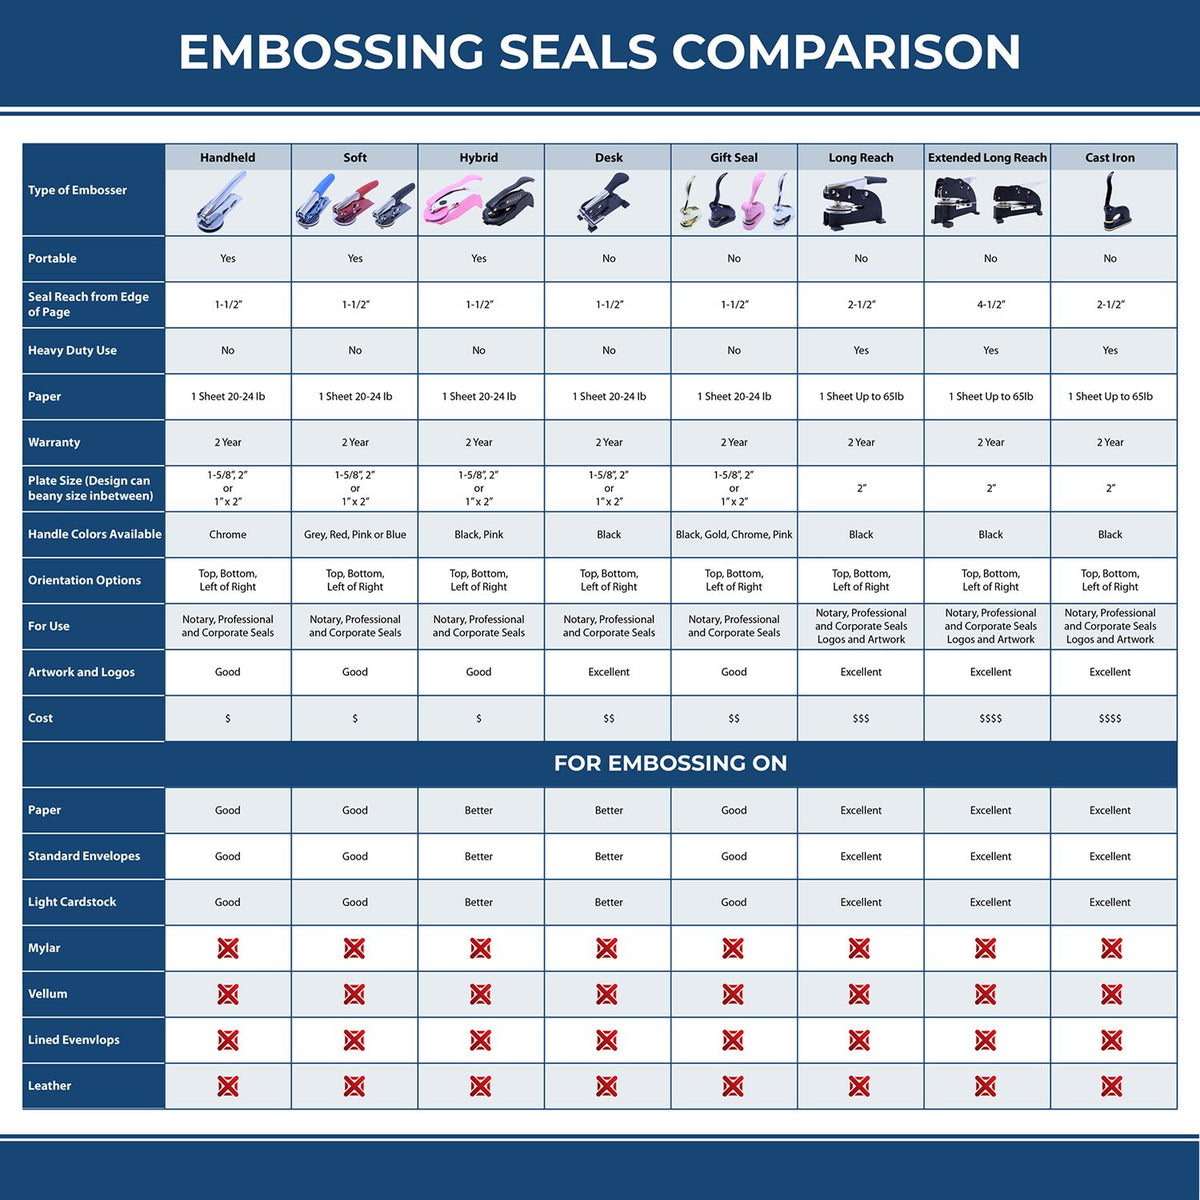 Forester Cast Iron Desk Seal Embosser 3027FOR Embossing Seal Comparison